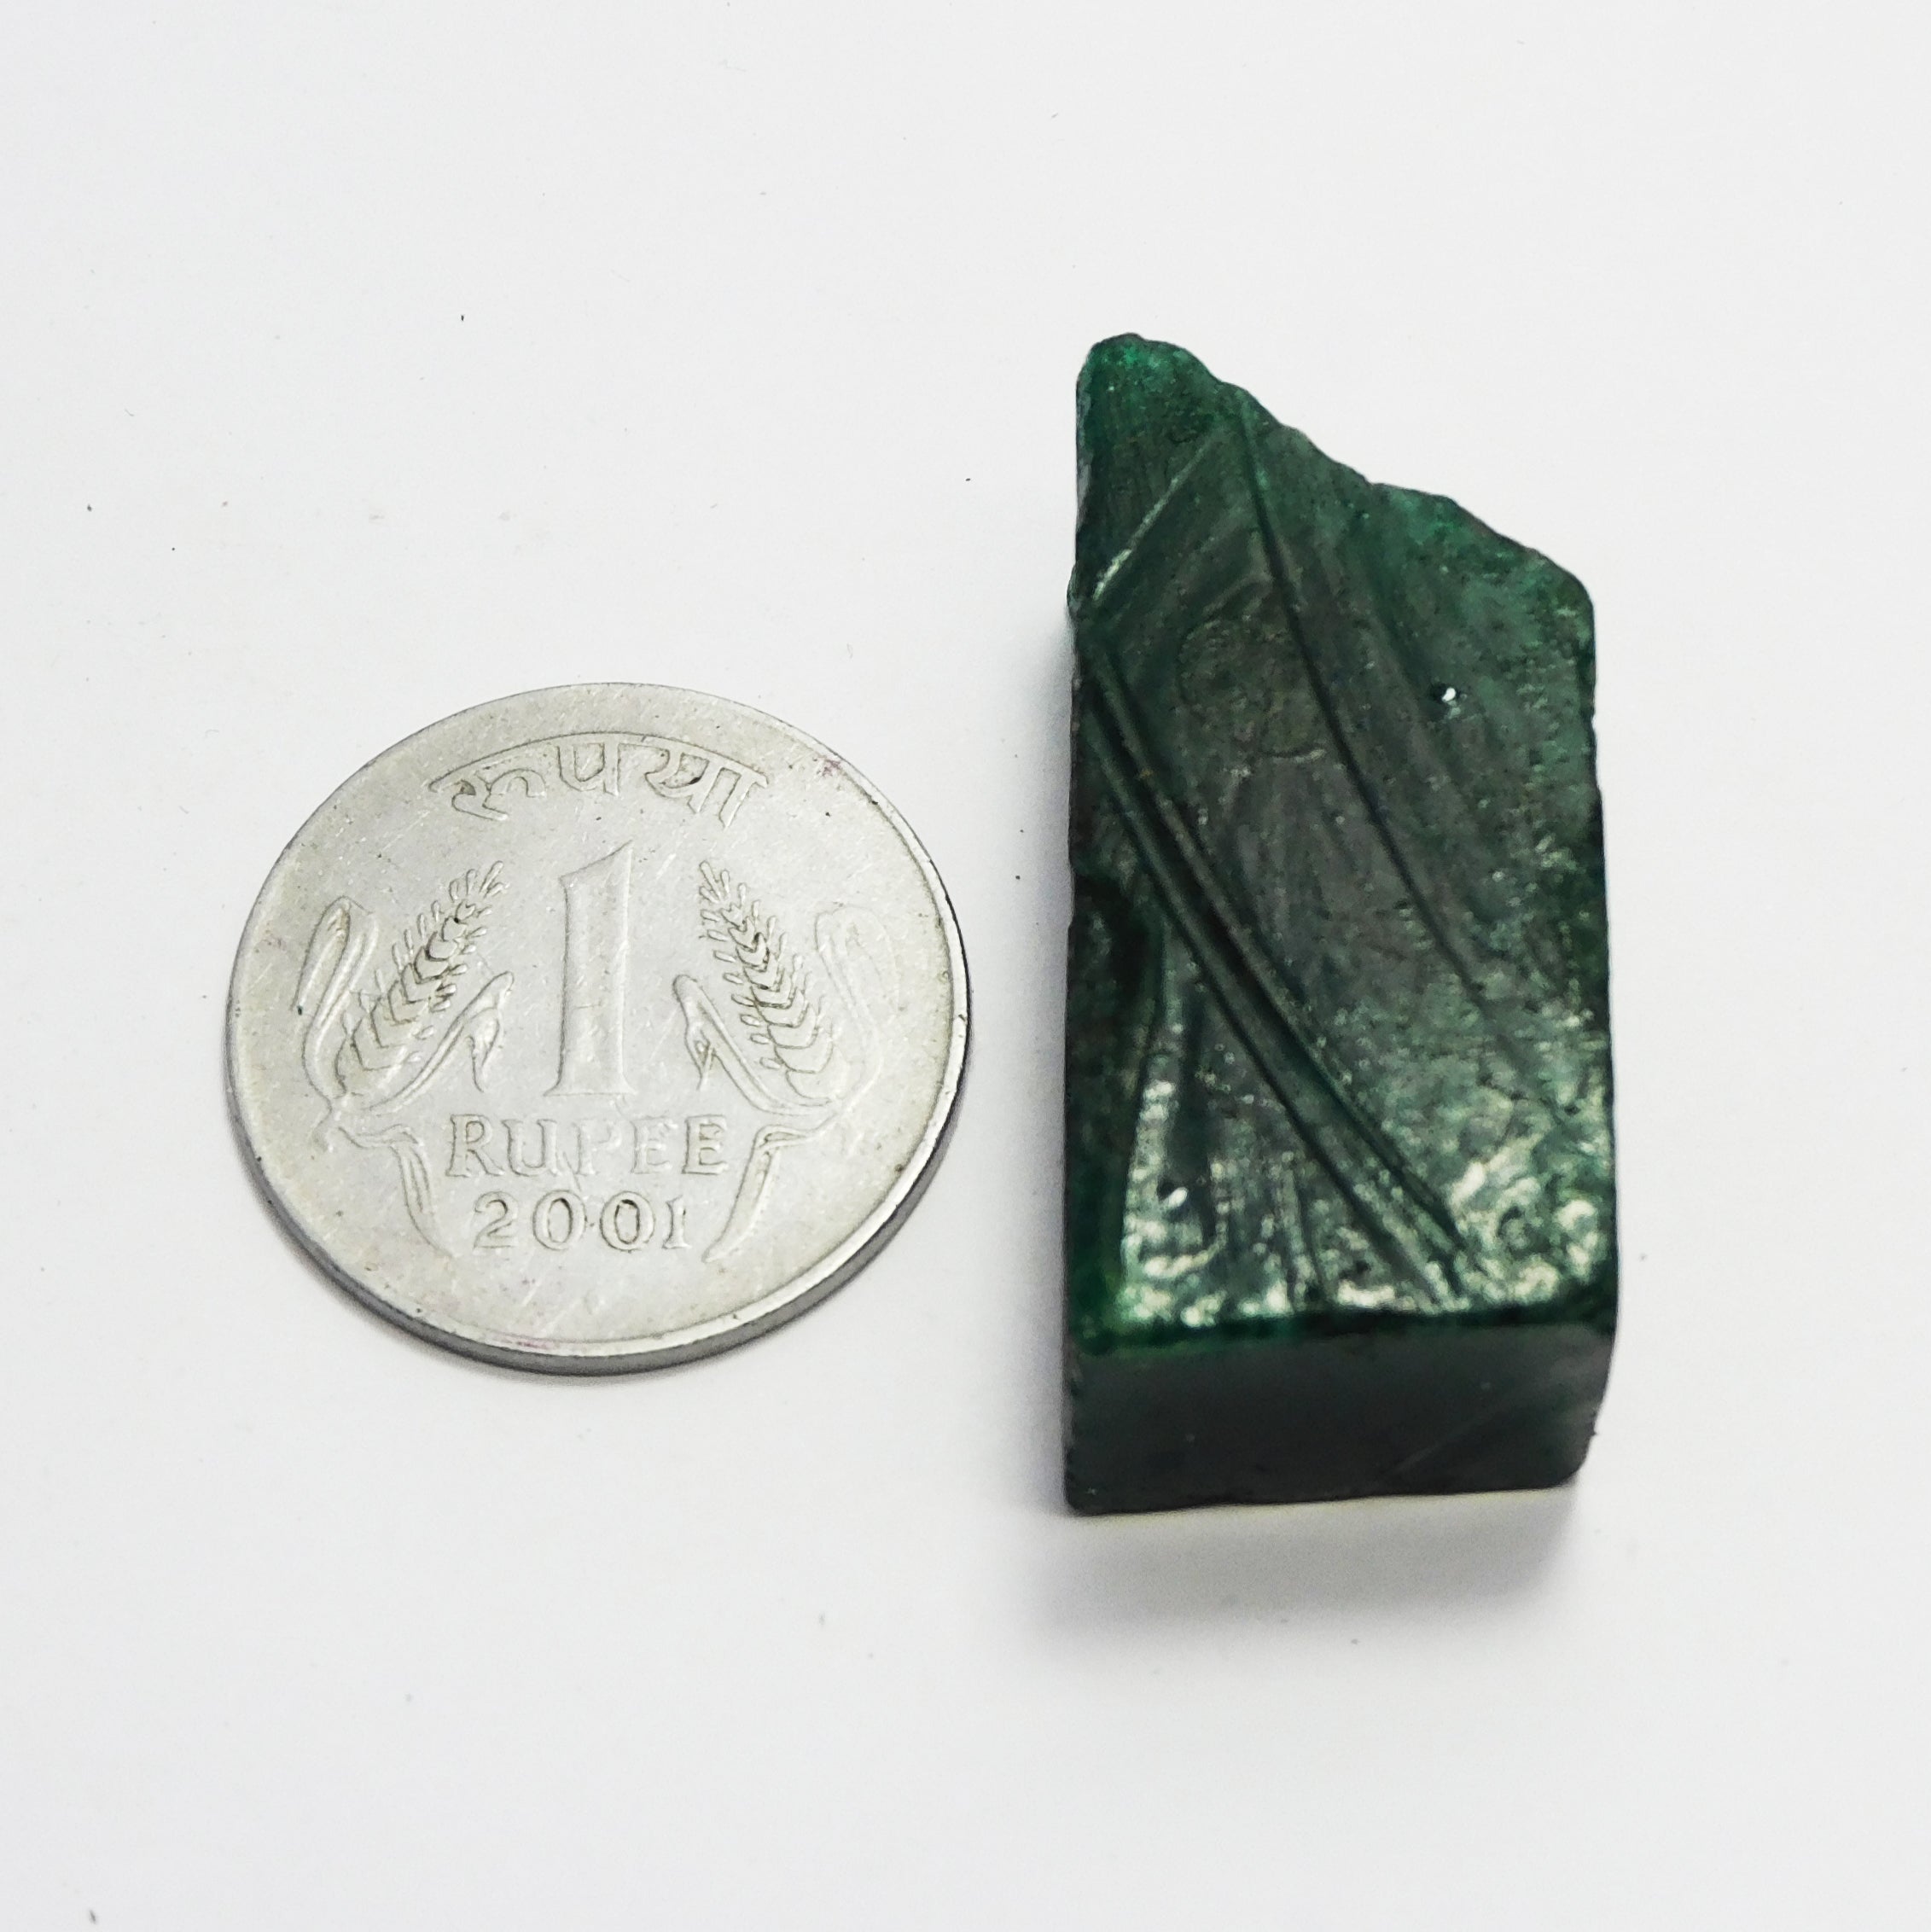 Jwelery Making Gemstone !! Uncut Raw Rough 96.15 Carat Natural Emerald Green Rough CERTIFIED Loose Gemstone | ON SALE